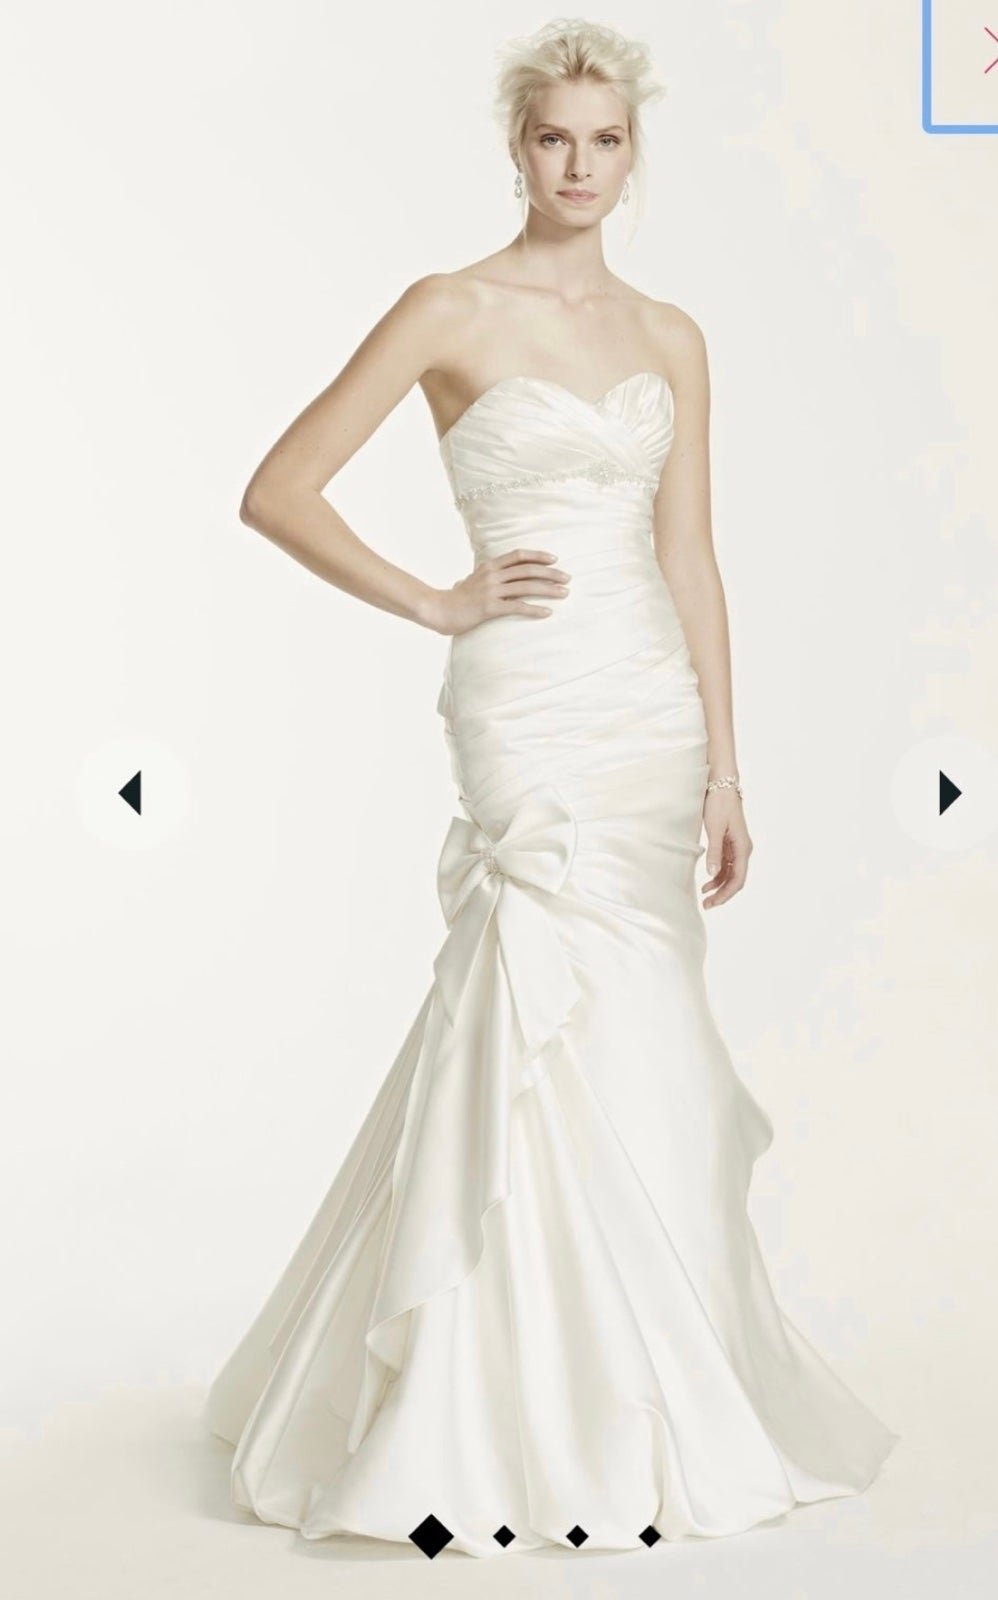 Personality NWT ivory strapless mermaid wedding dress G8NCOI7Yb hot sale